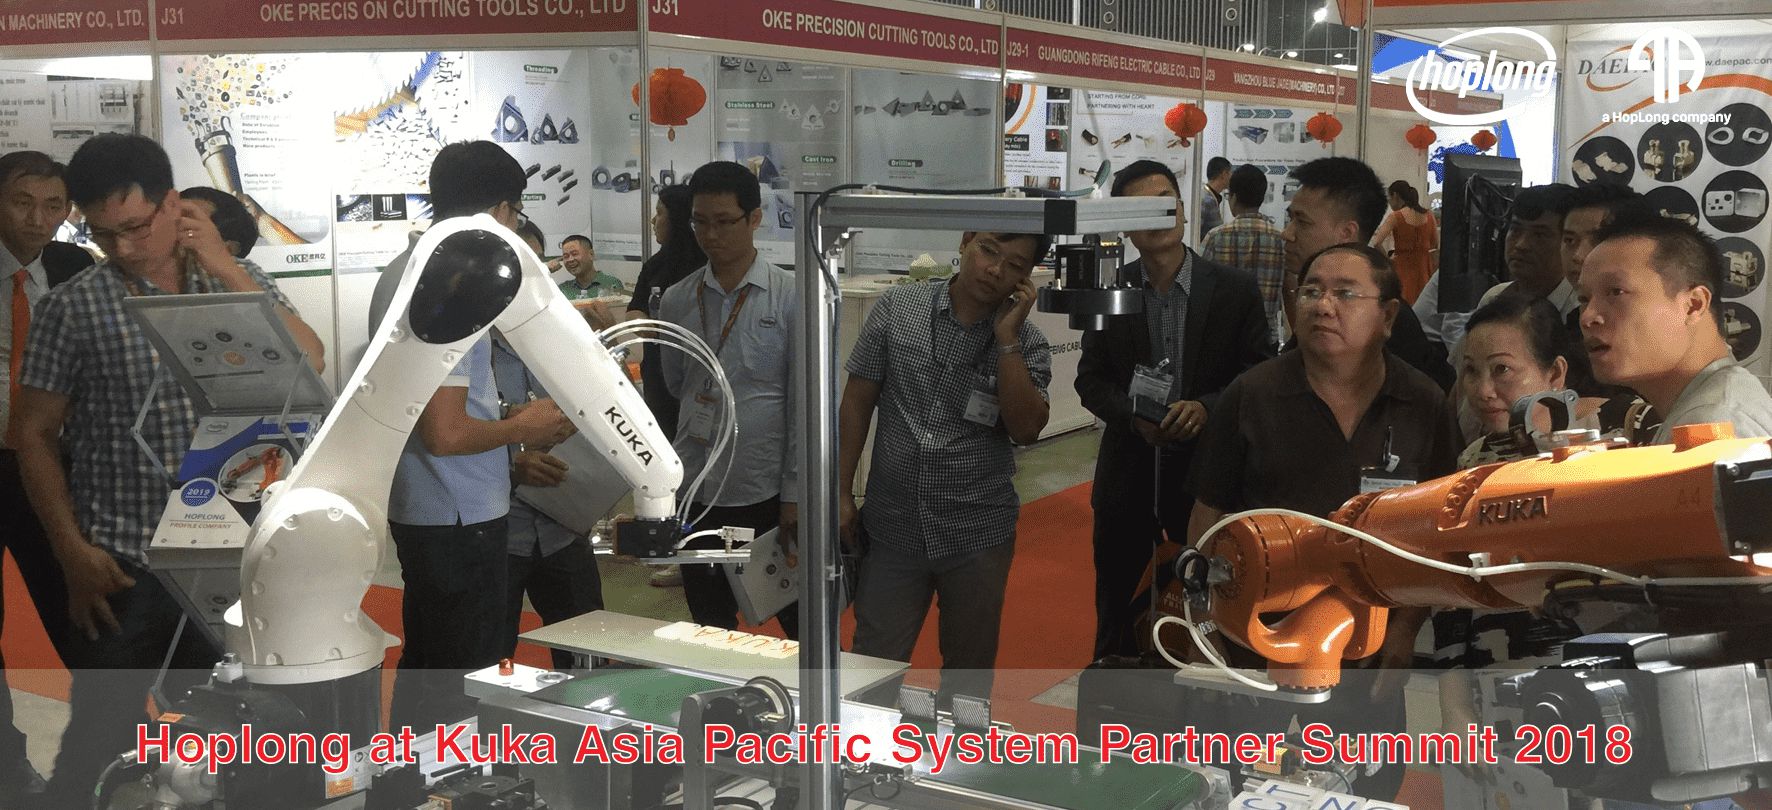 Hoplong at Kuka Asia Pacific System Partner Summit 2018